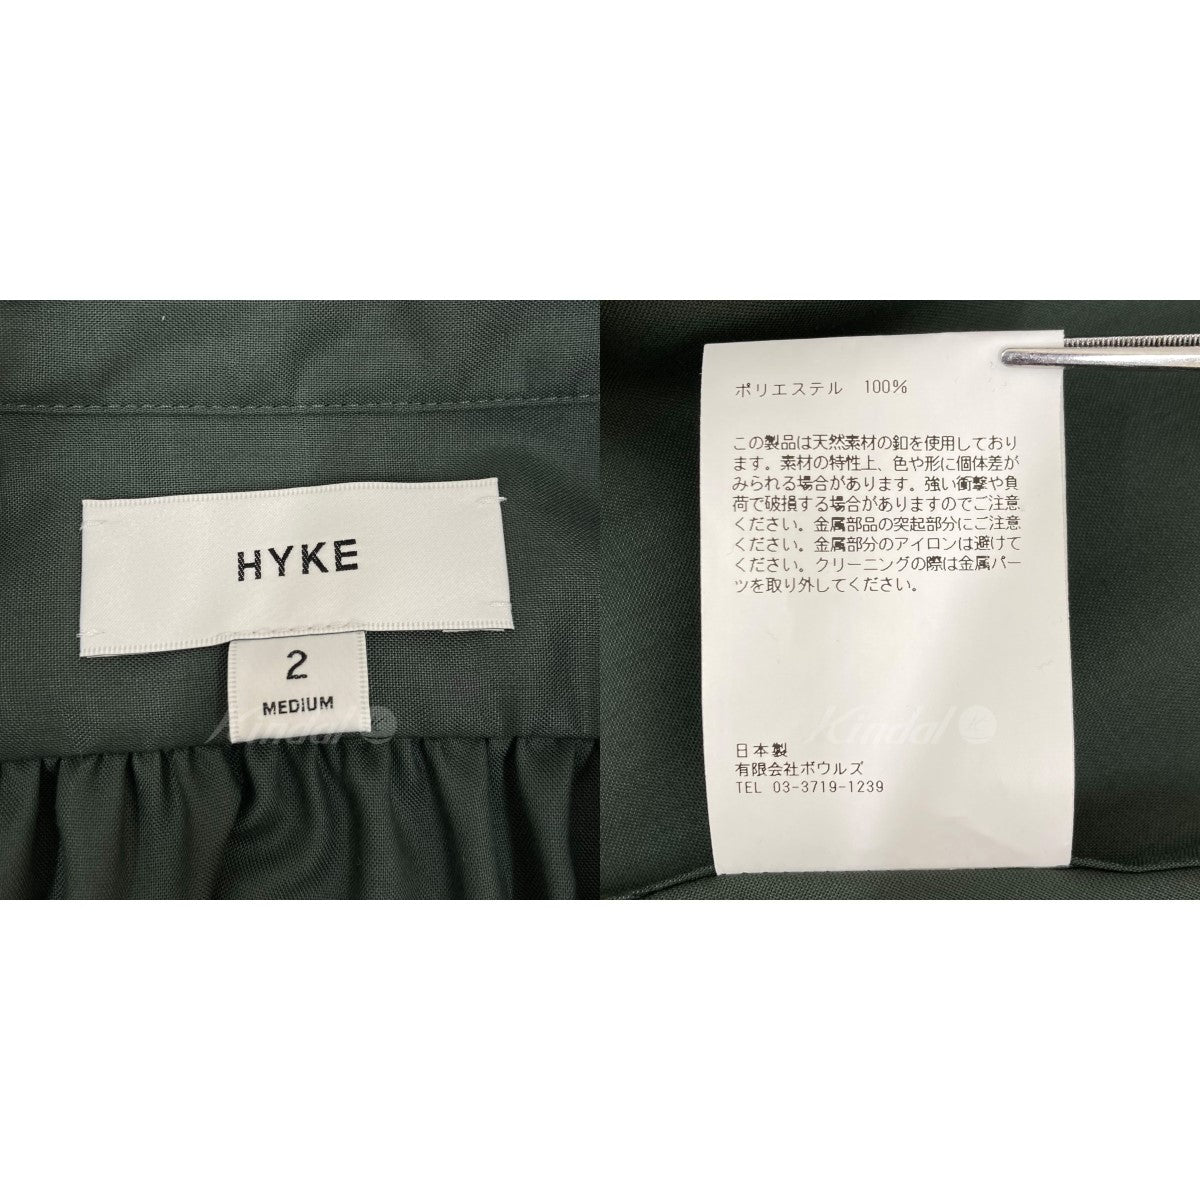 HYKE(ハイク) FD BOSOM SHIRT DRESS 長袖ワンピース 232-16190